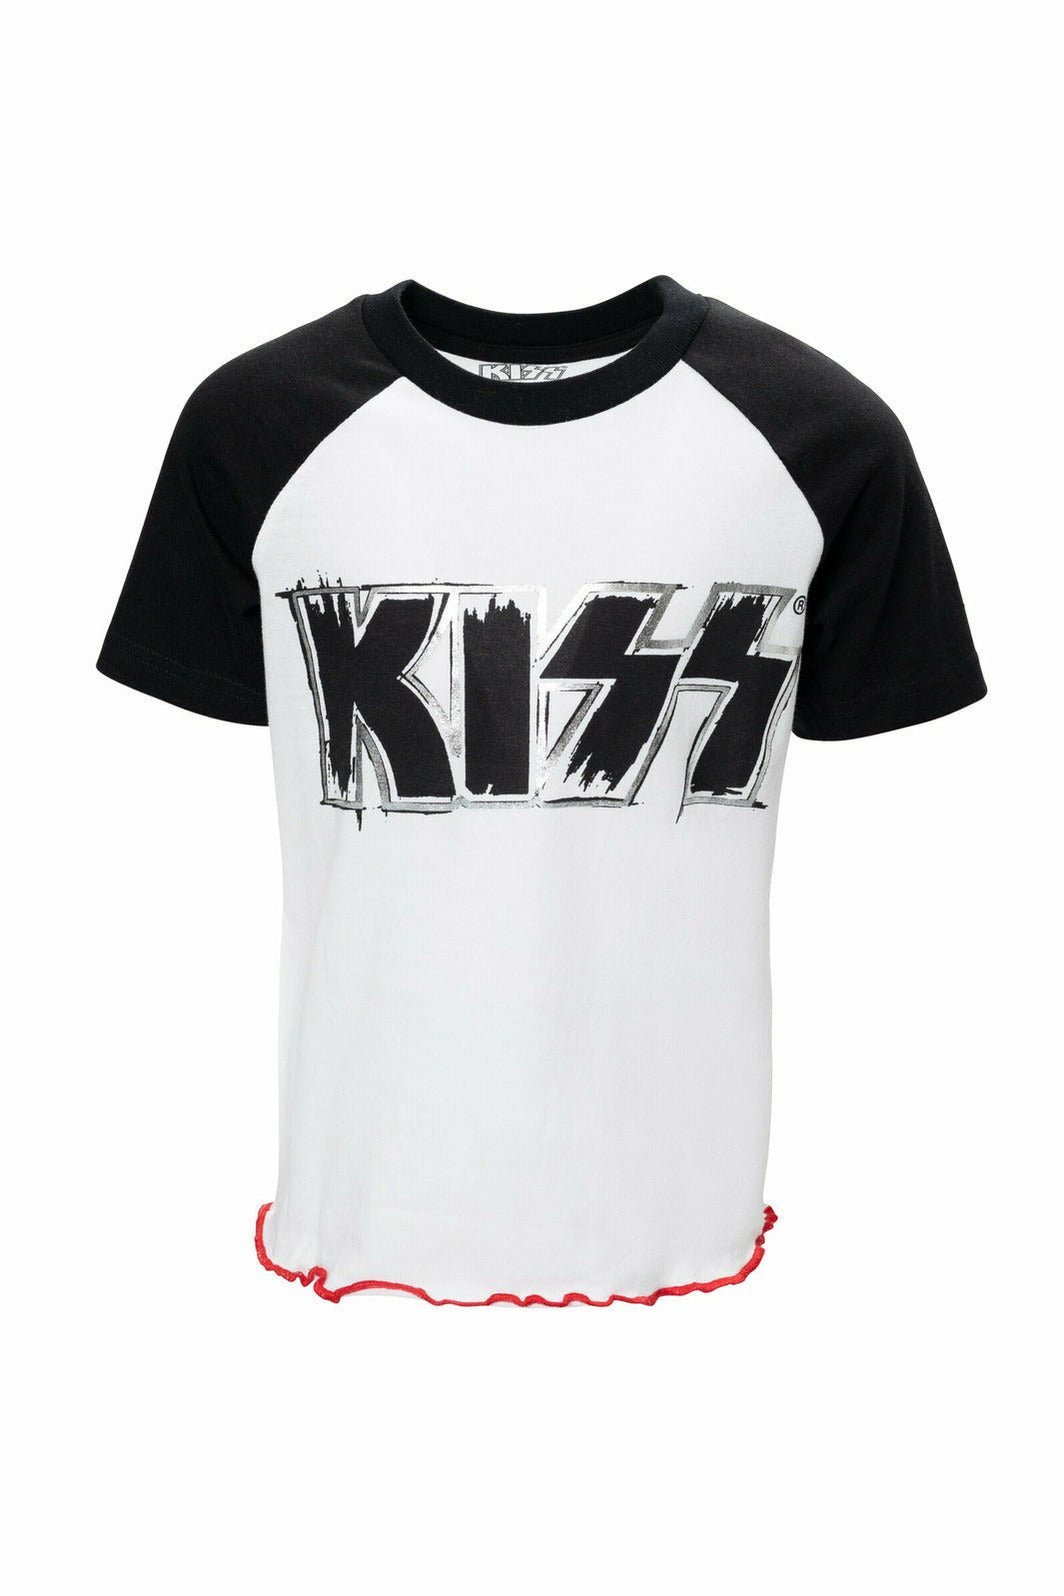 KISS 2 Pack Graphic T-Shirts - imagikids